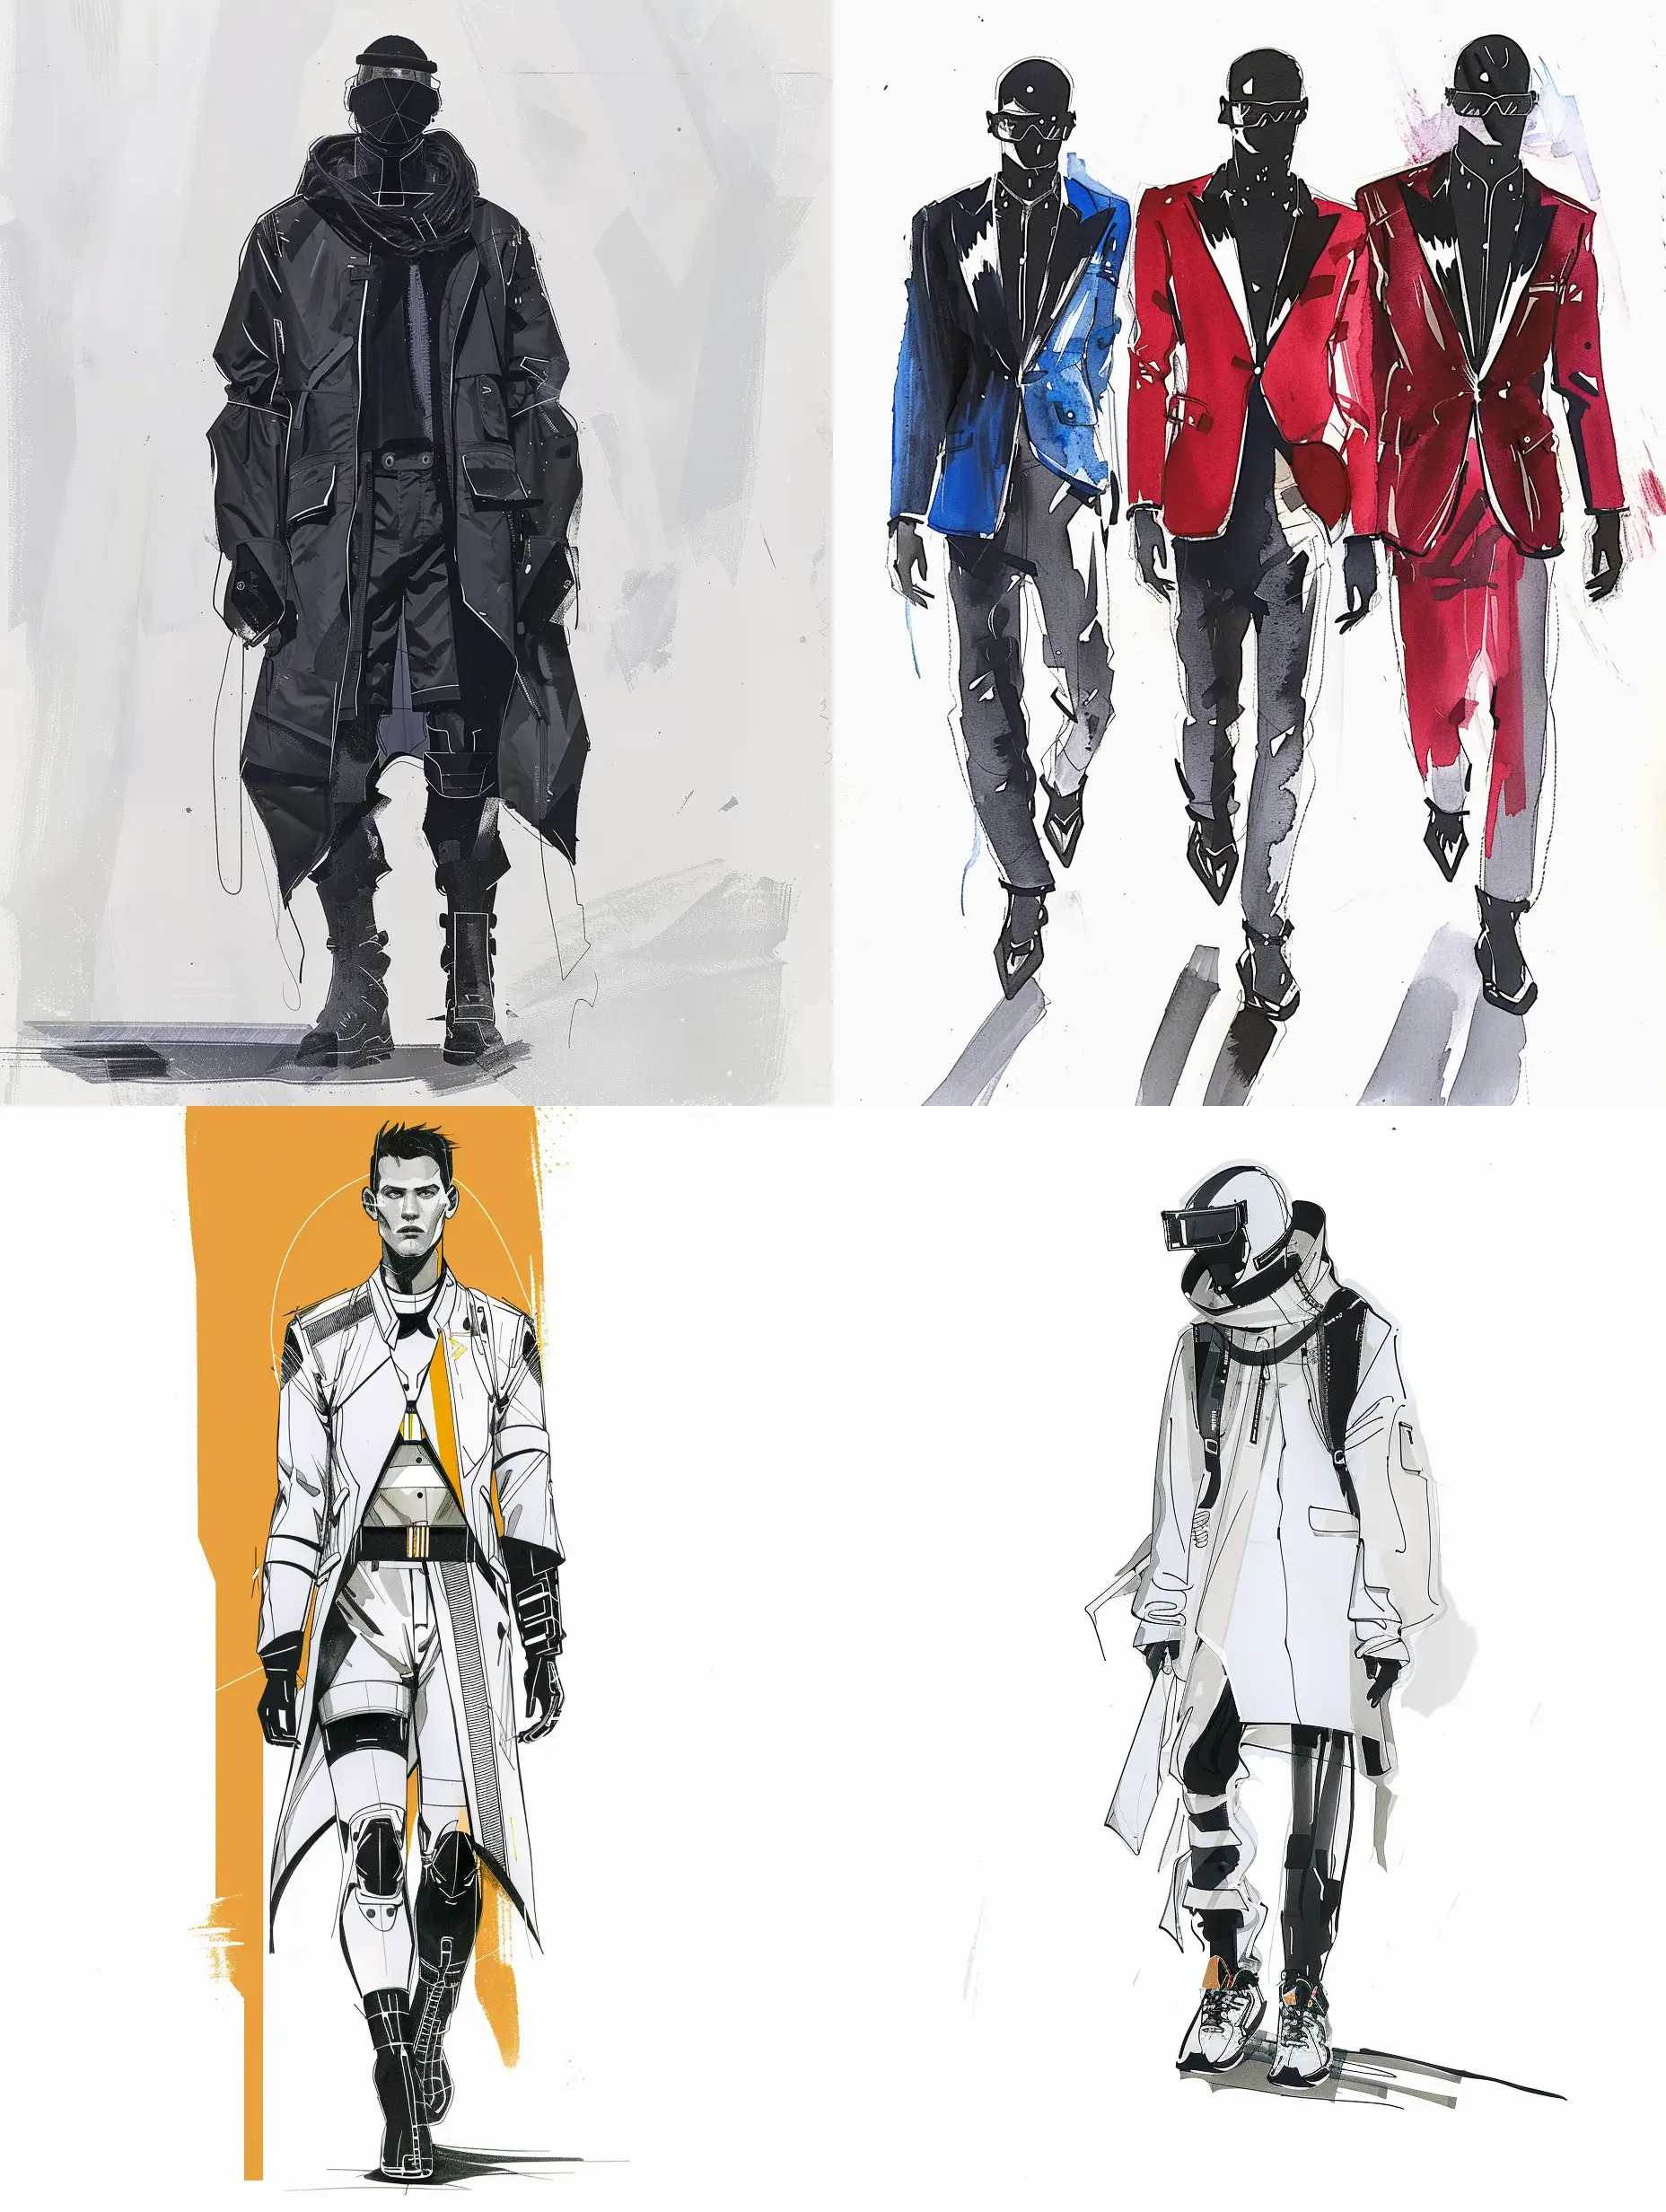 Futuristic-Male-High-Fashion-Inspired-by-The-ThreeBody-Problem-Minimalist-Runway-Sketches